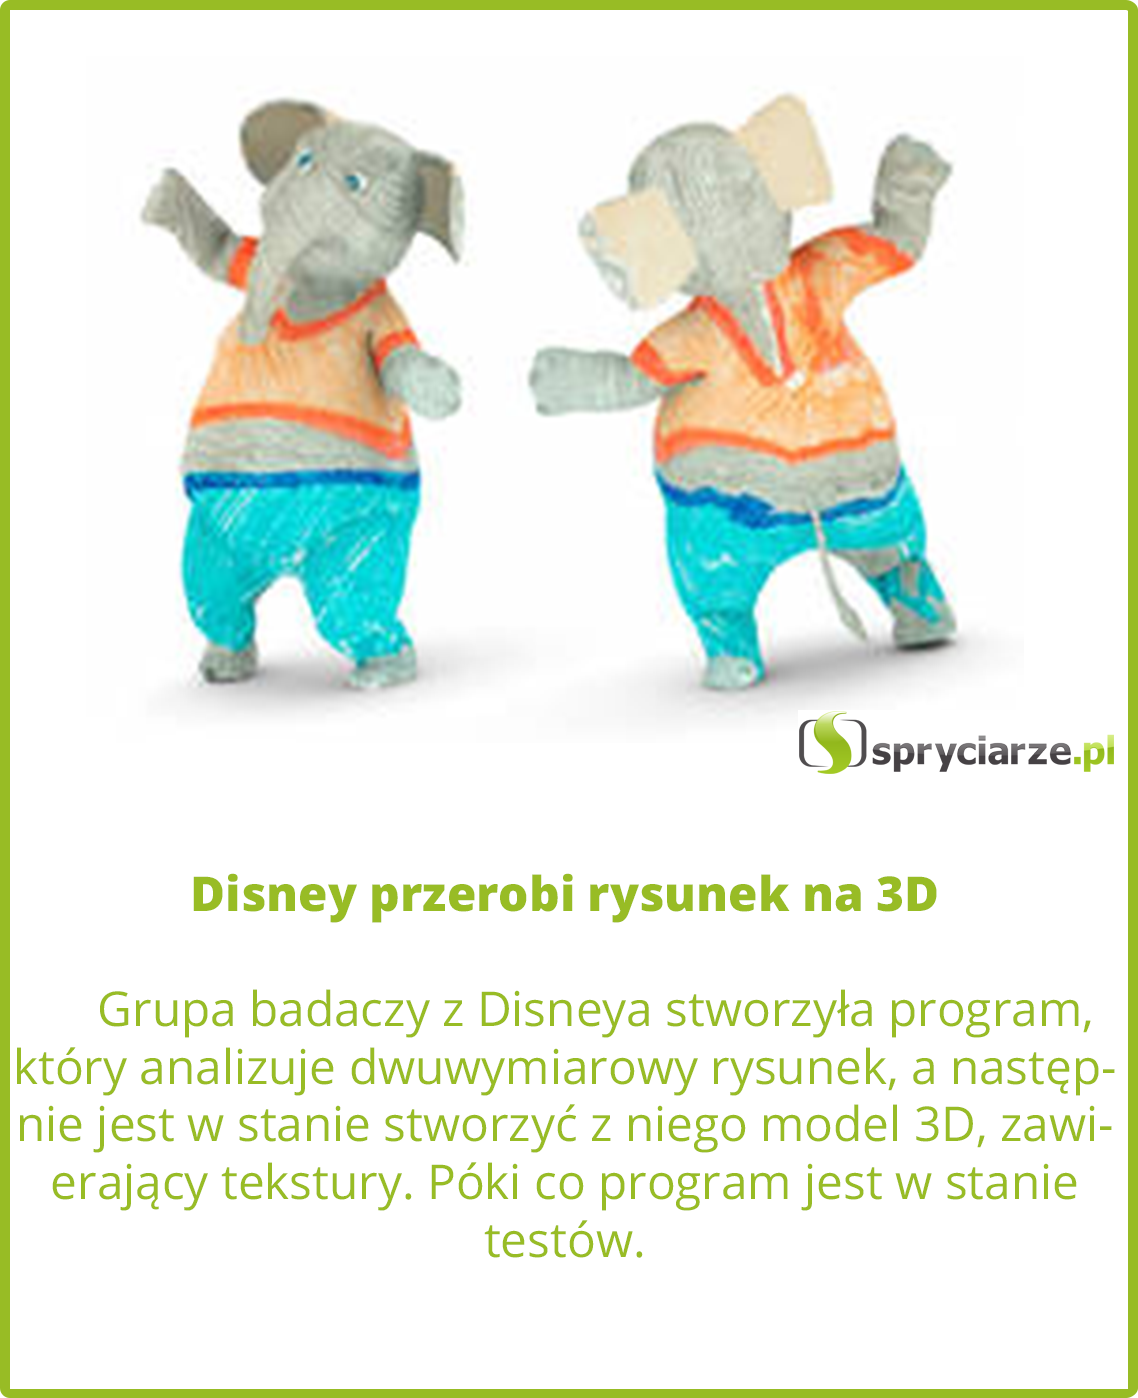 Disney przerobi rysunek na 3D